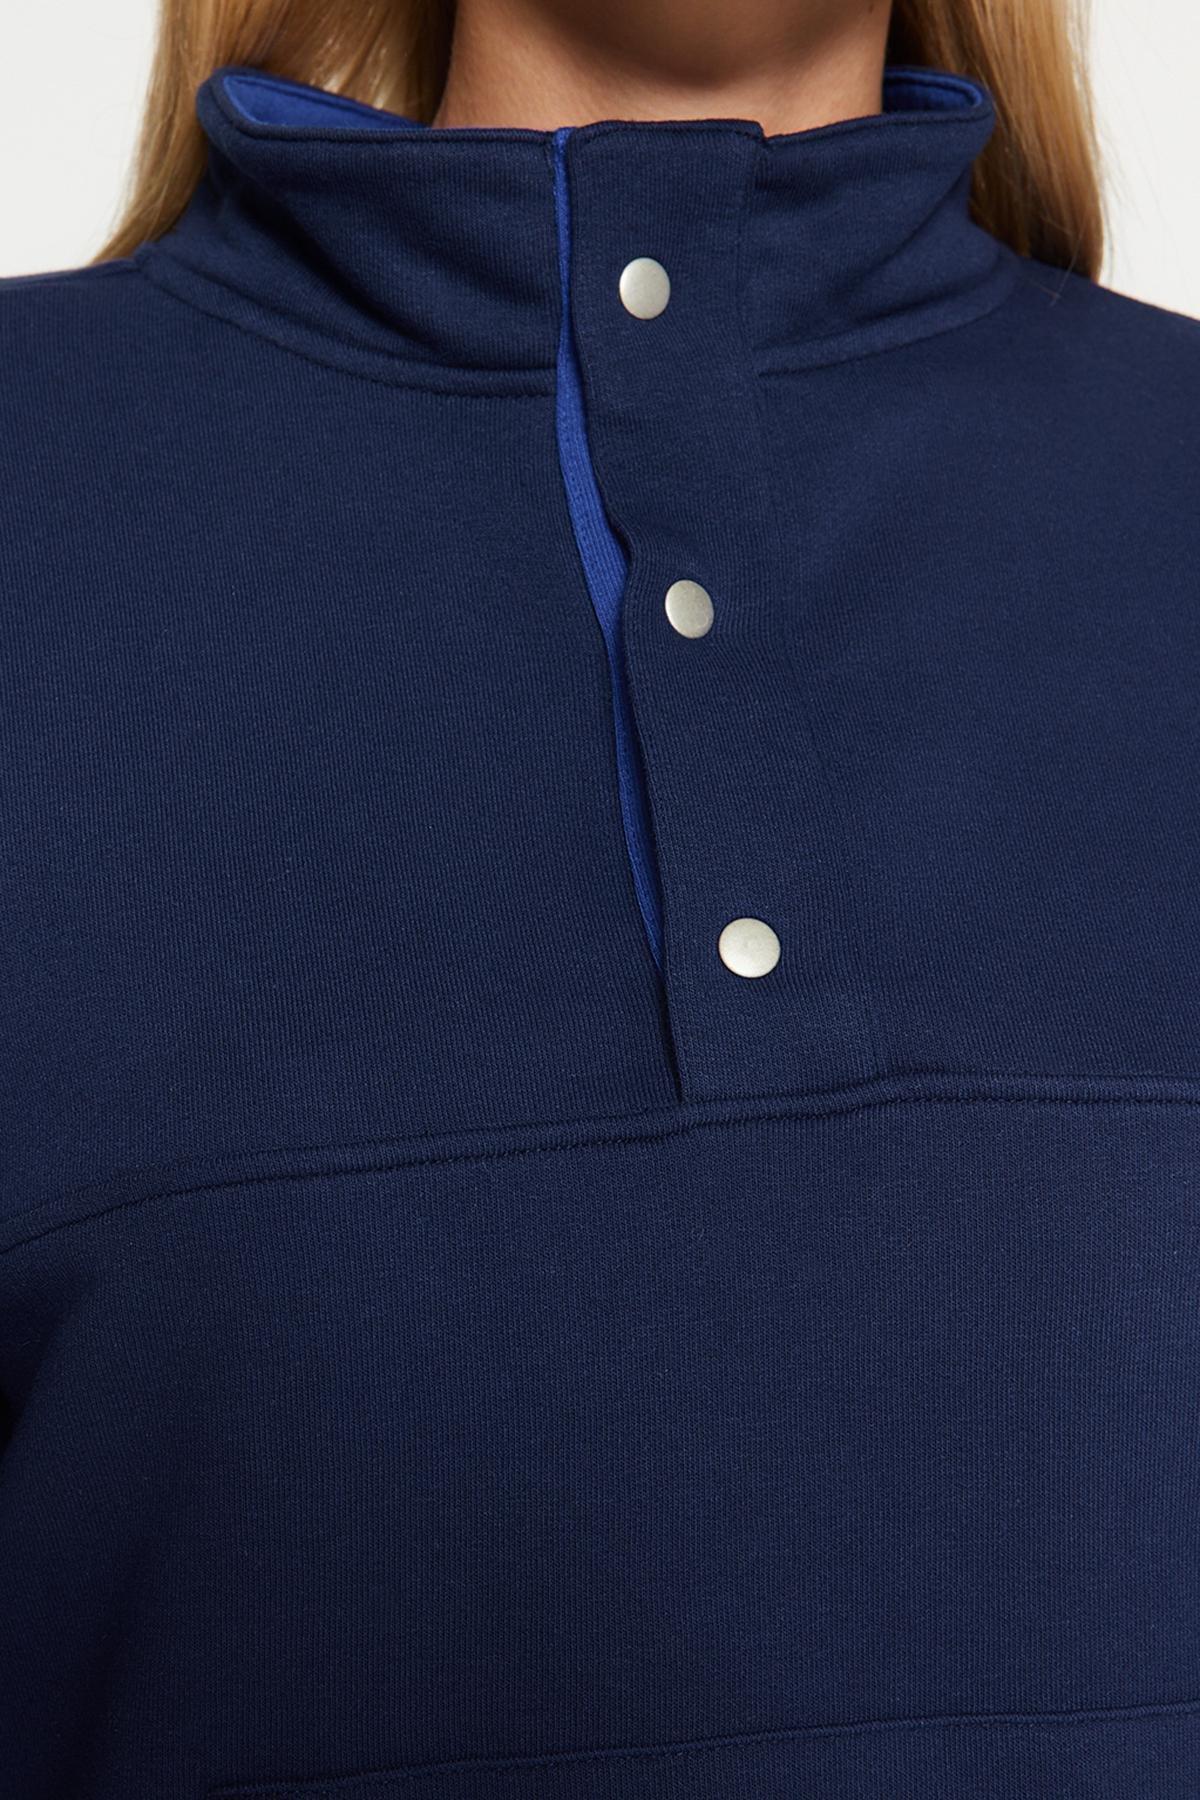 Trendyol - Blue Press-Studs Knitted Sweatshirt